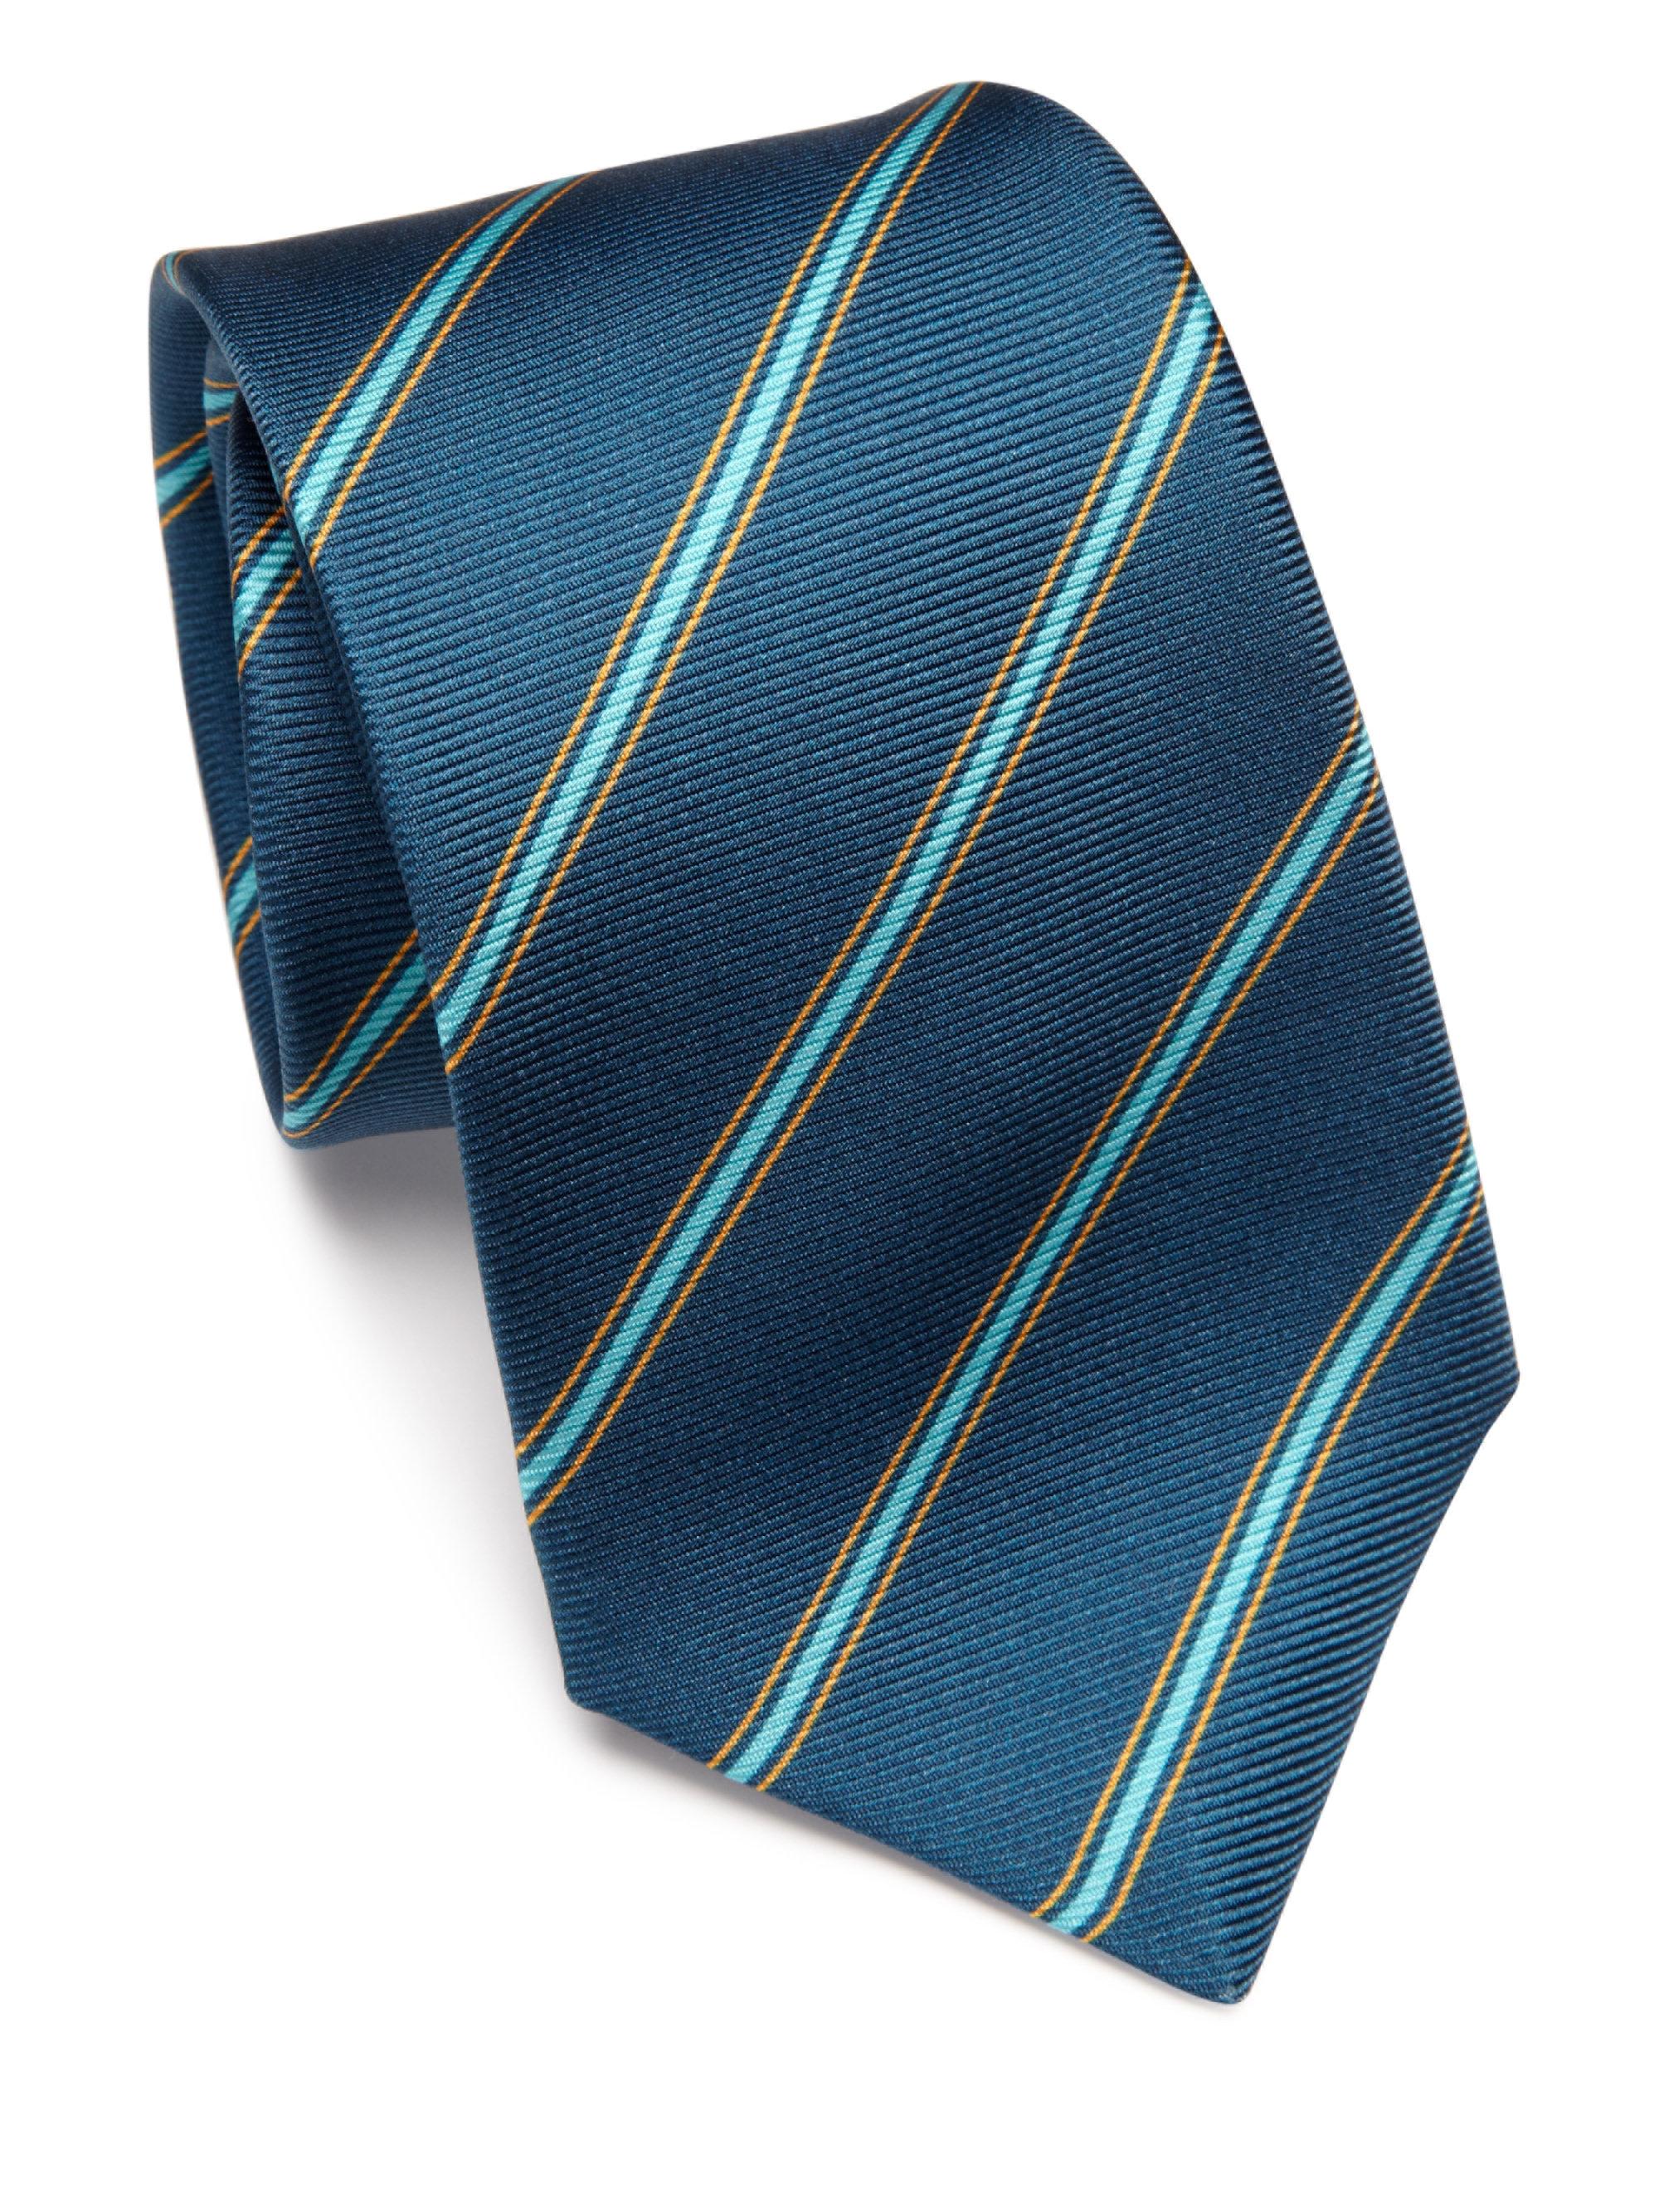 Lyst - Kiton Diagonal Striped Tie in Blue for Men